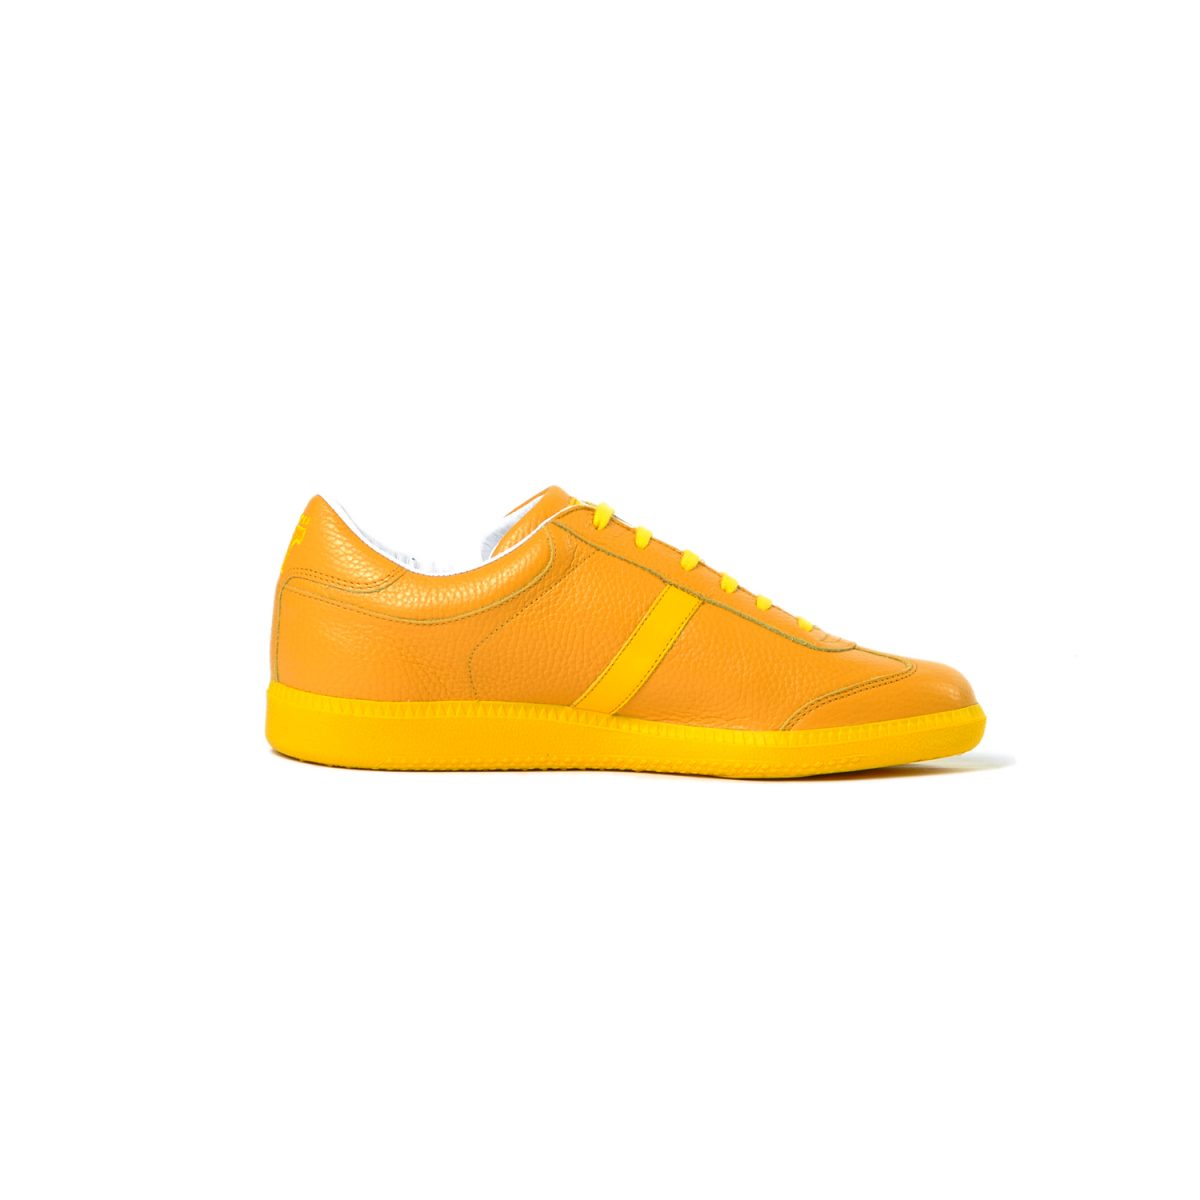 Tisza shoes - Compakt - Yellow